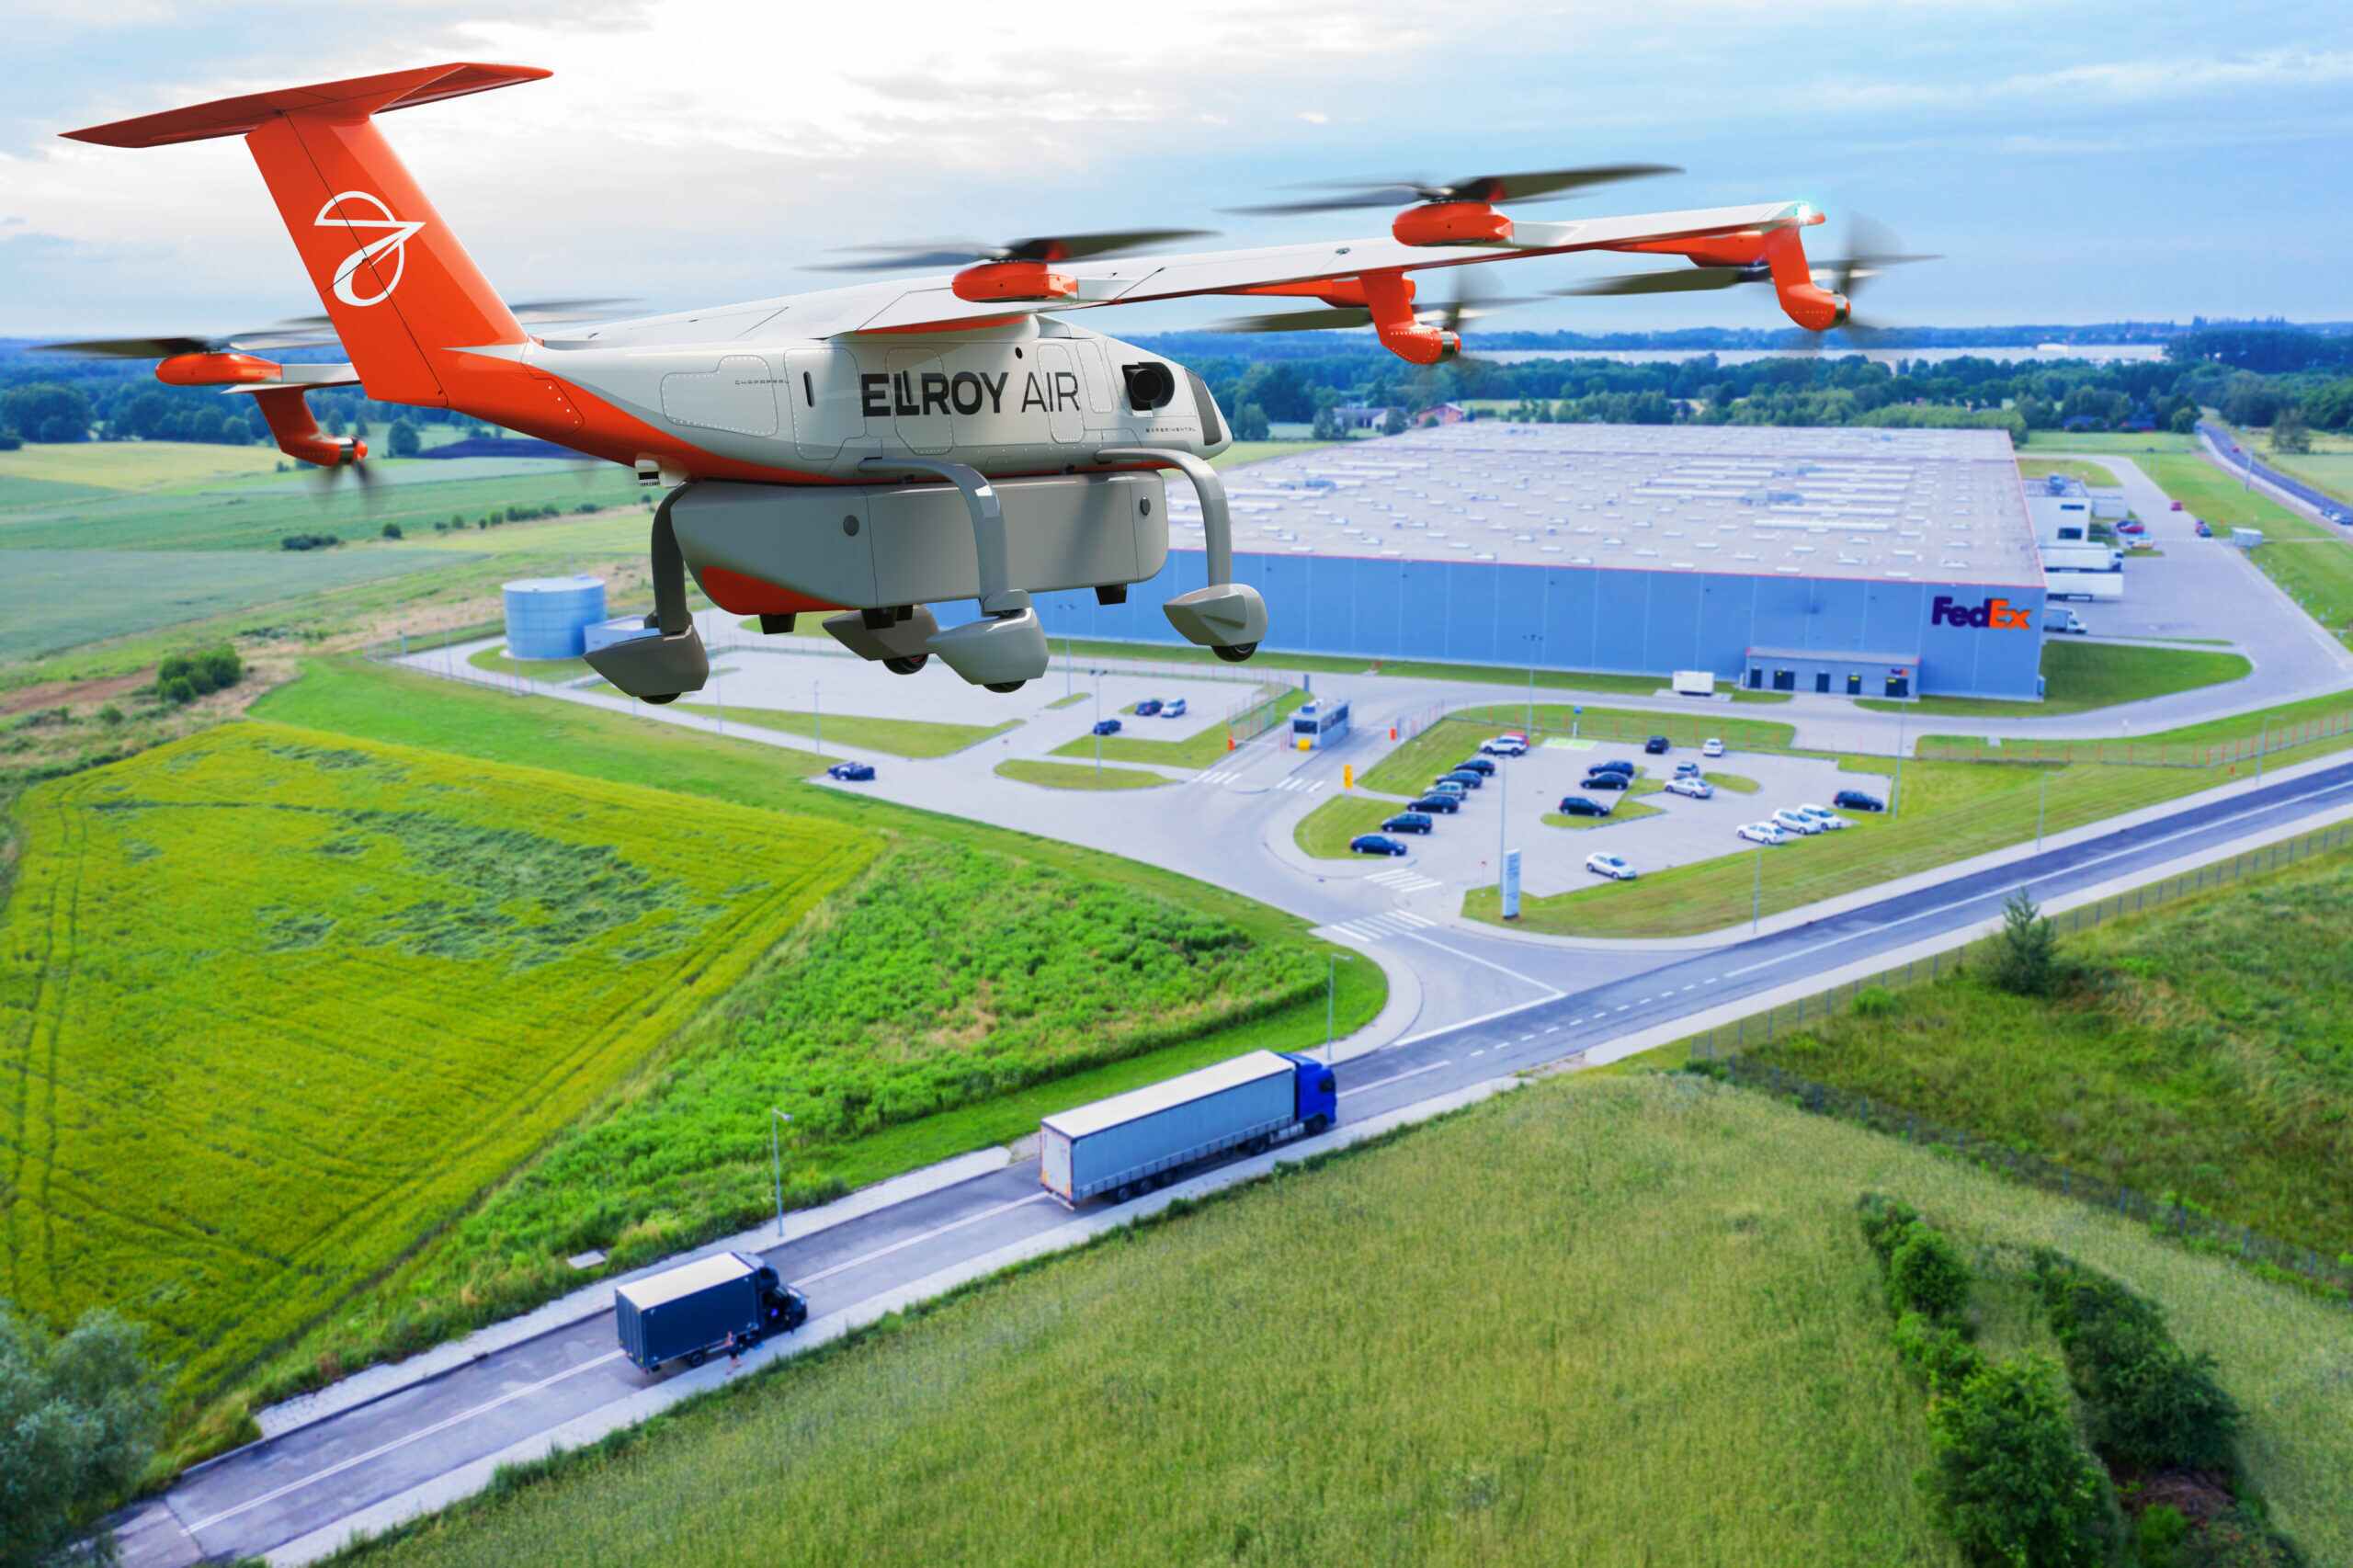 FedEx will test autonomous drone cargo delivery in 2023